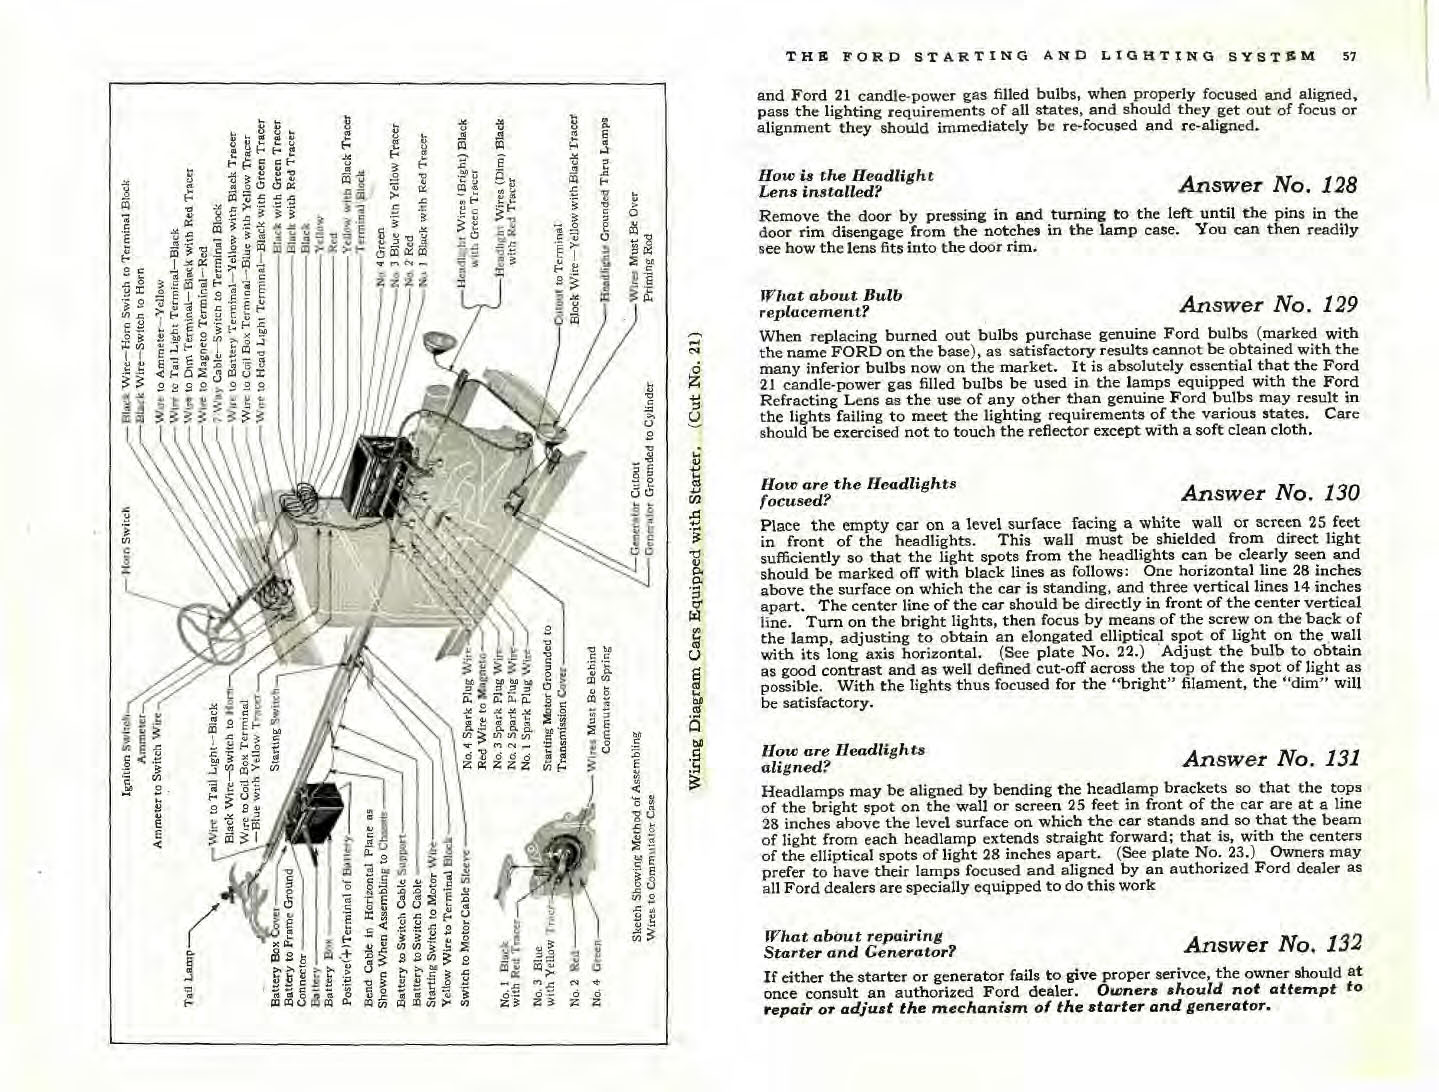 n_1926 Ford Owners Manual-56-57.jpg